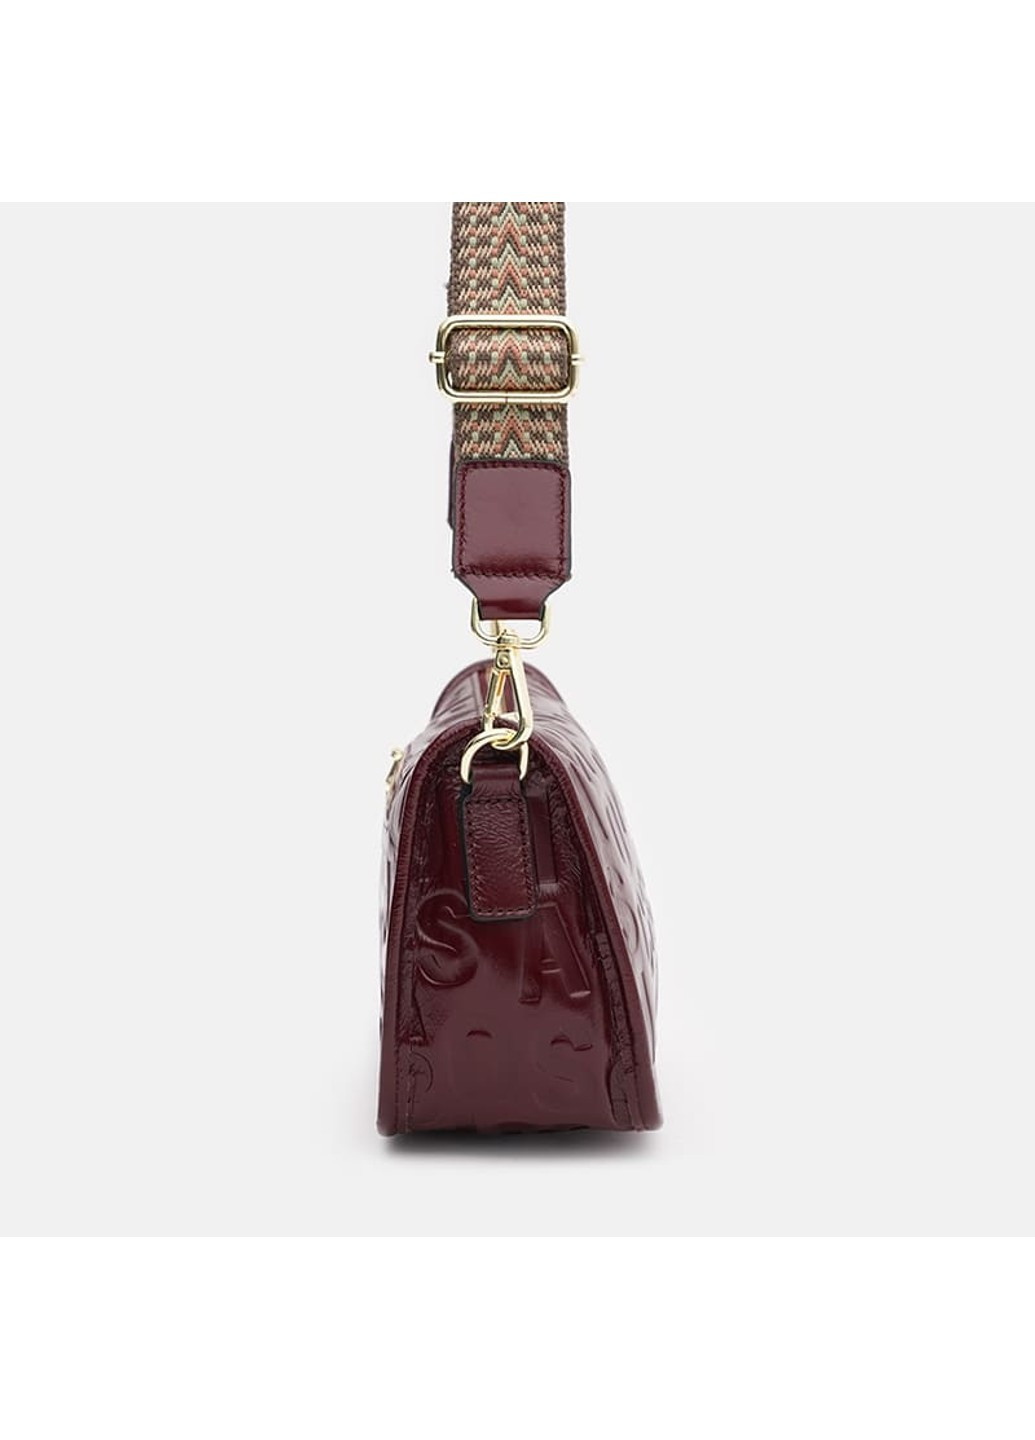 Женская кожаная сумка K19063w-burgundy Keizer (274535880)